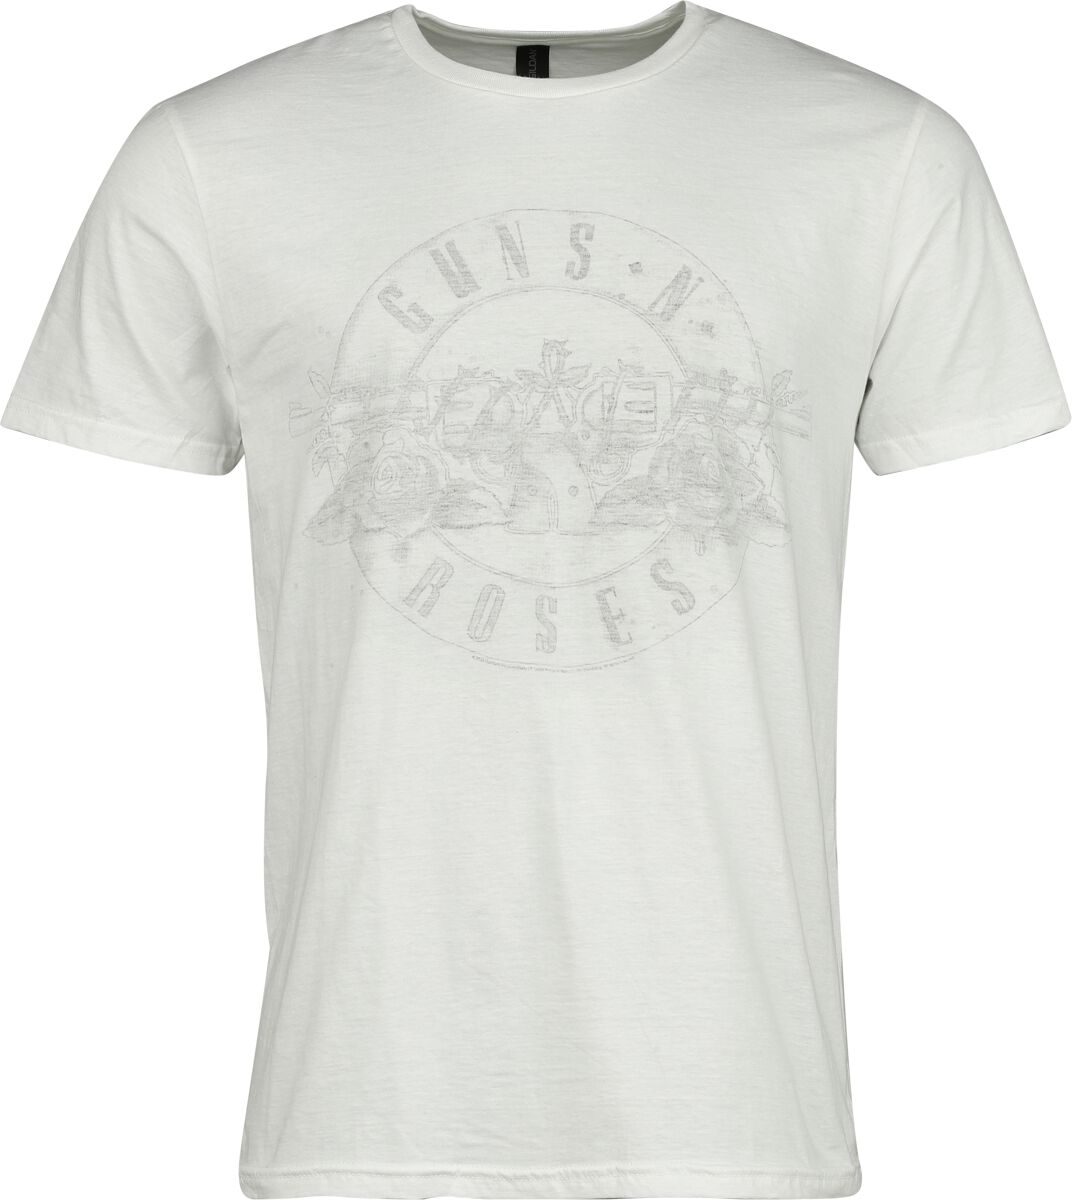 Guns N` Roses T-Shirt - Watercolour Bullet - M bis 3XL - für Männer - Größe L - weiß  - Lizenziertes Merchandise!